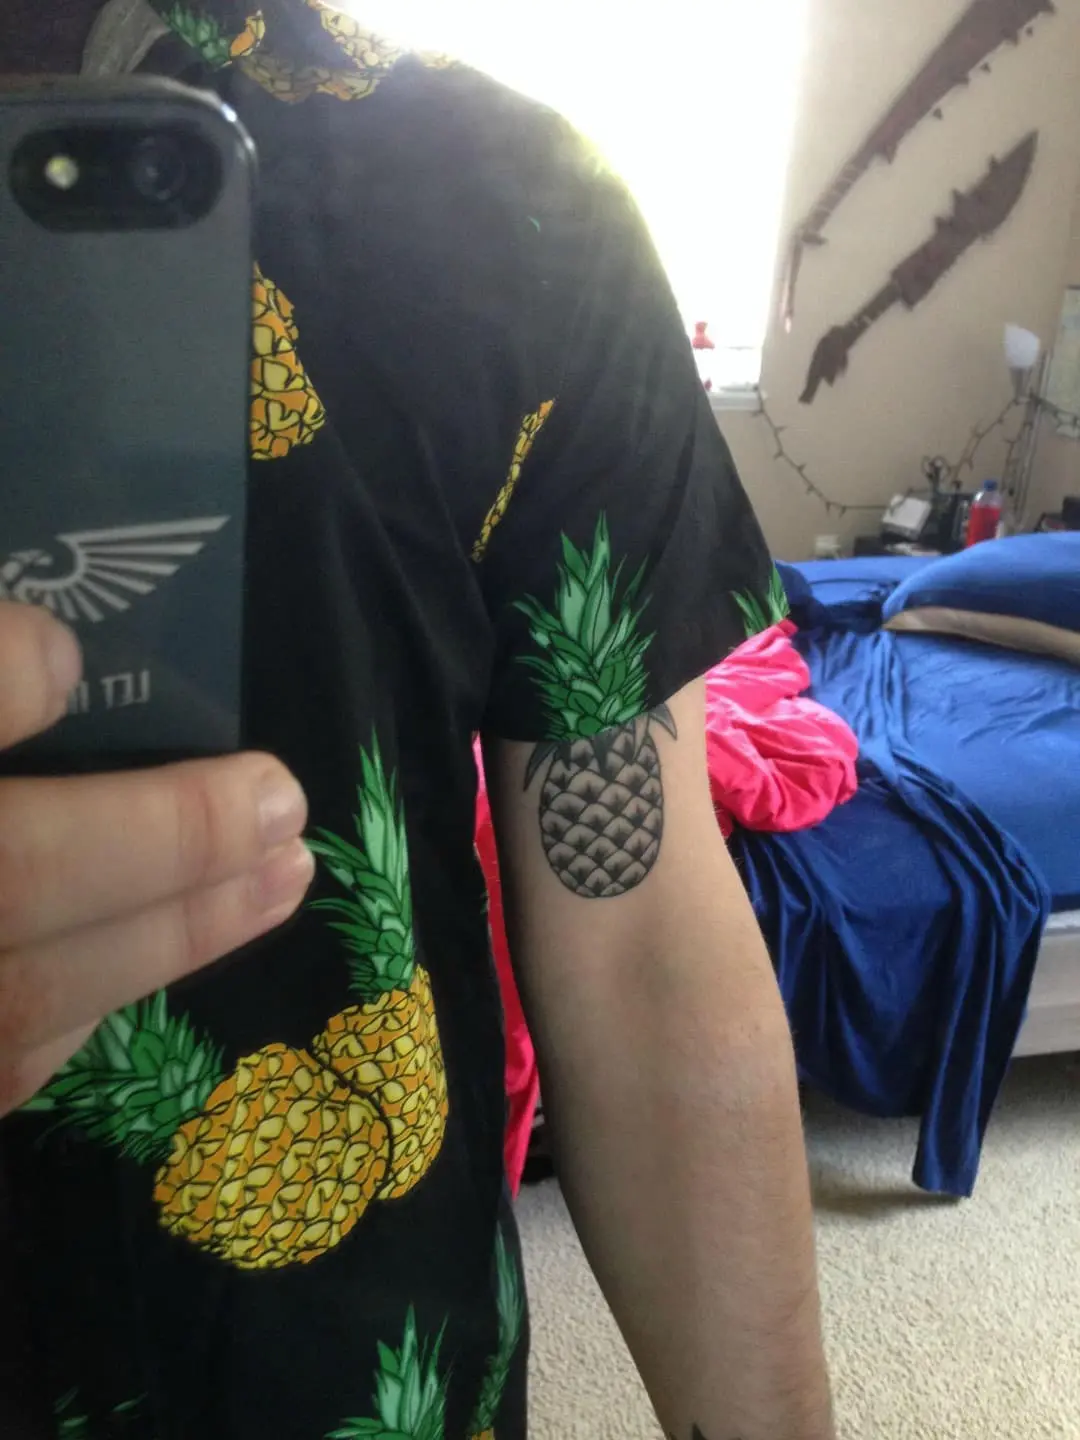 Matching Pineapple Tattoo and Shirt